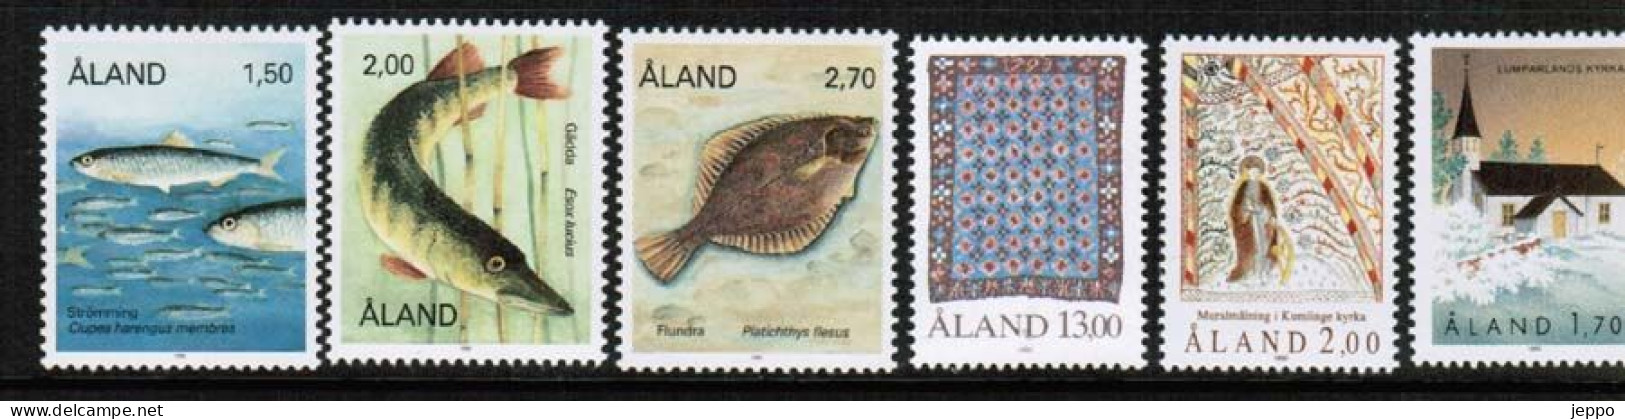 1990 Aland Islands Complete Year Set Mnh. - Aland